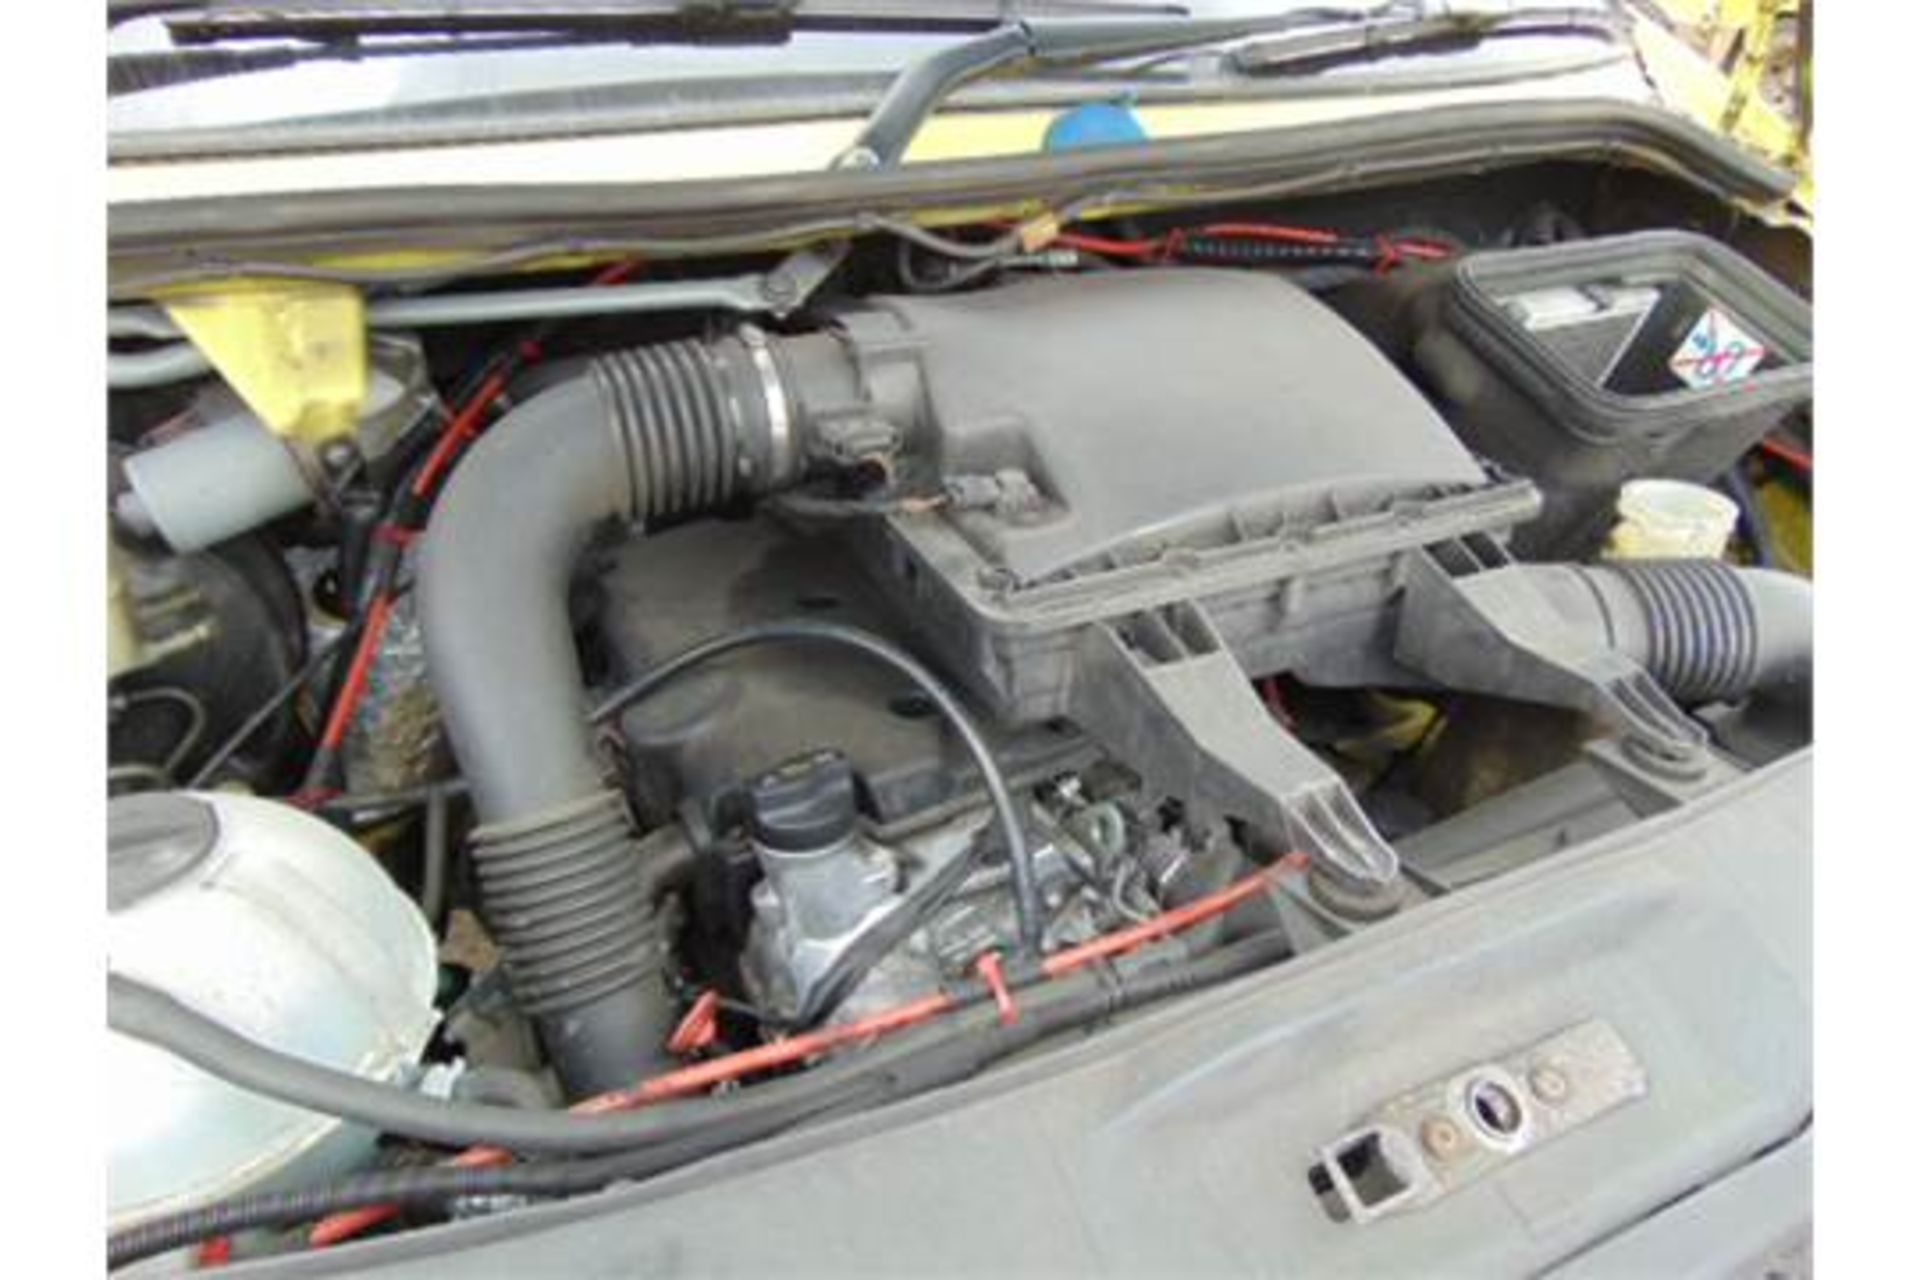 Mercedes Sprinter 515 CDI Turbo diesel ambulance - Image 20 of 20